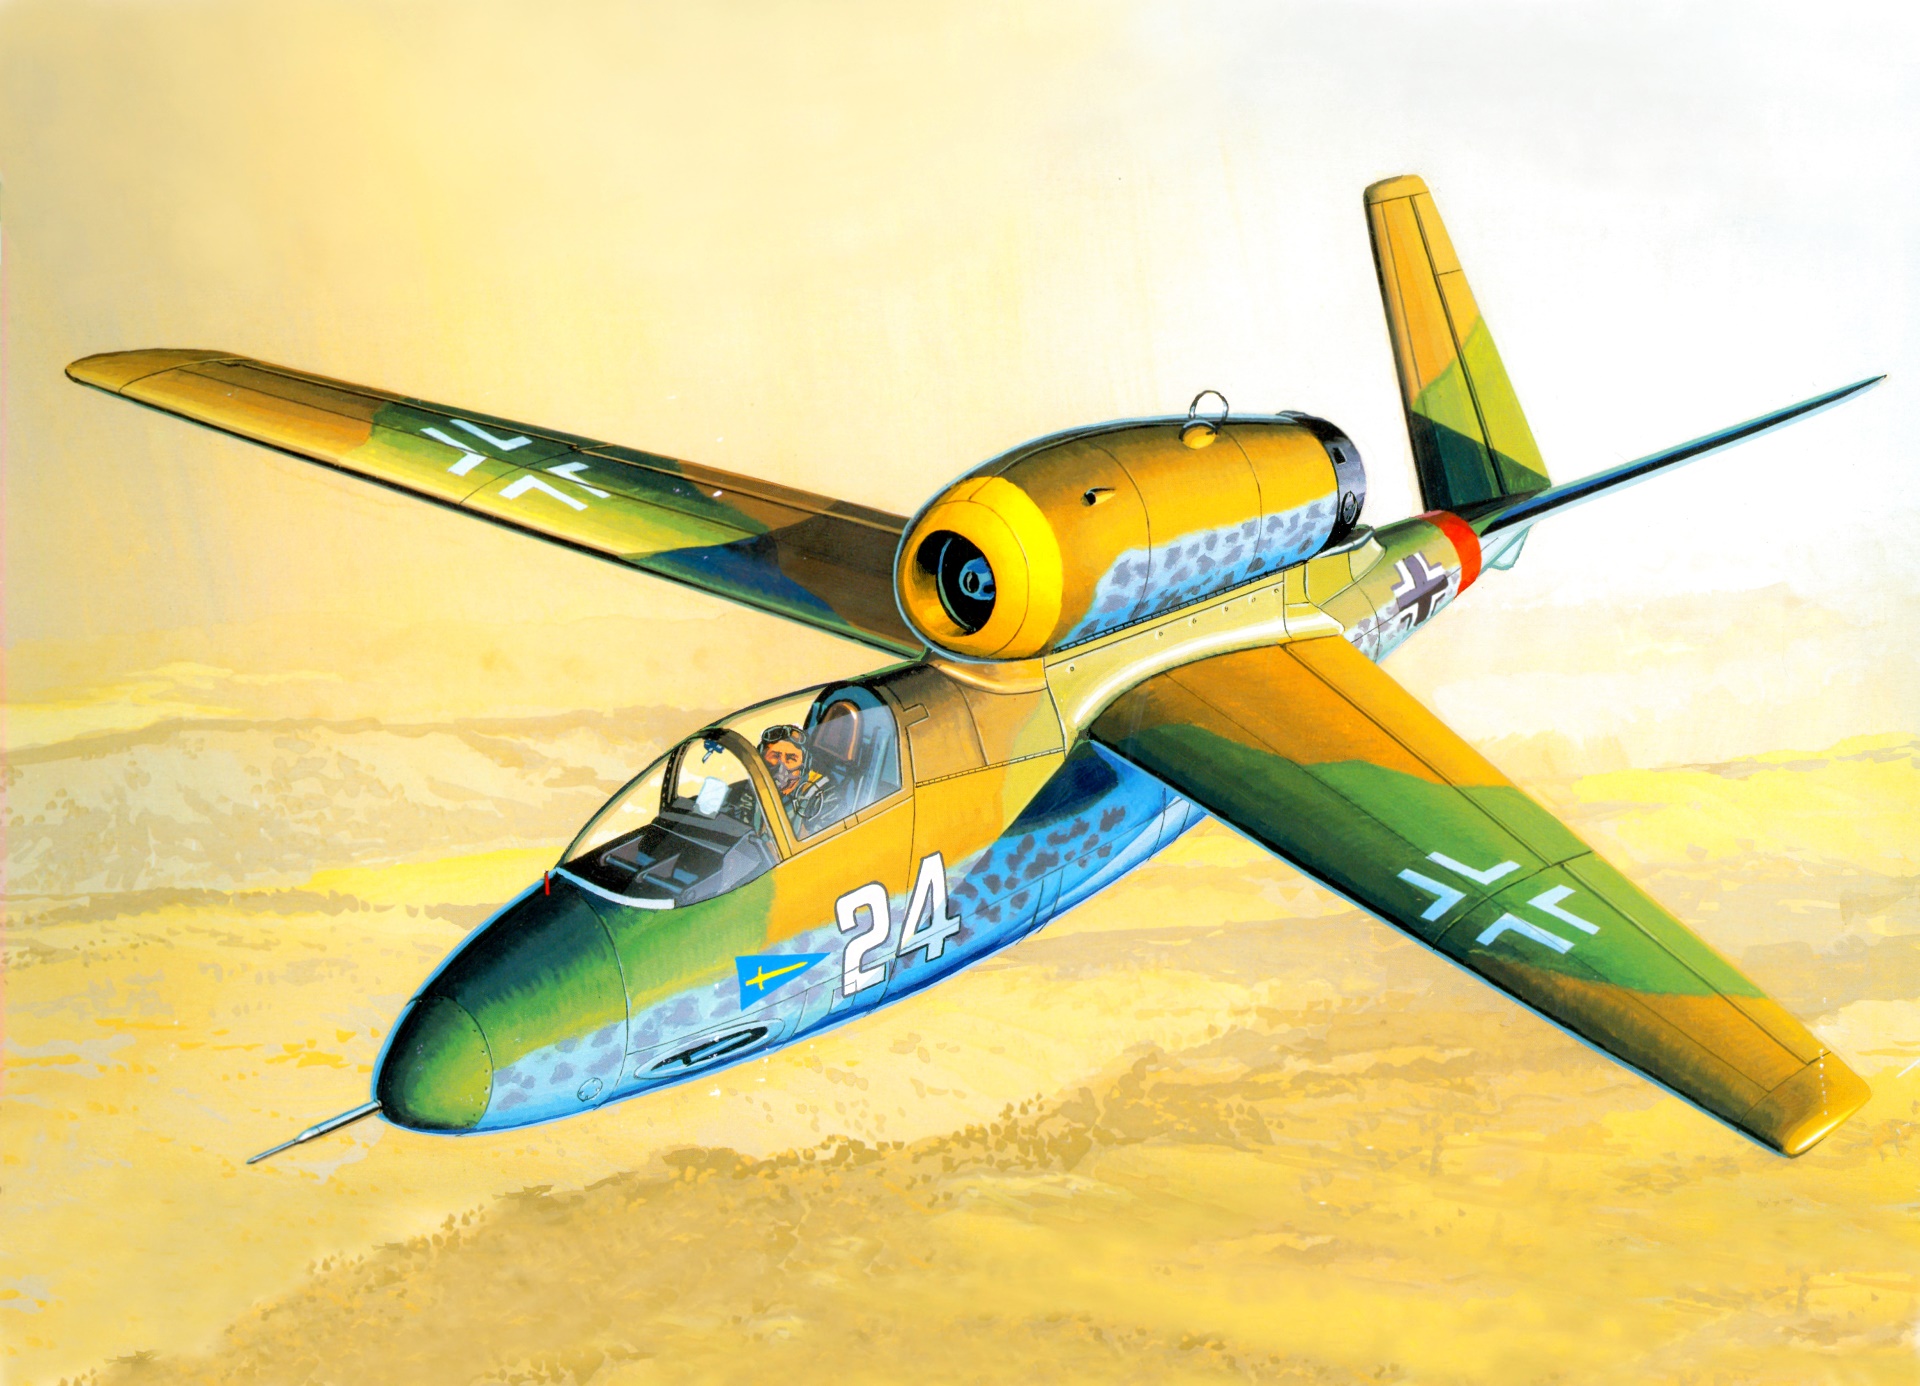 General 1920x1386 prototypes artwork military aircraft vehicle military aircraft Luftwaffe German aircraft Heinkel